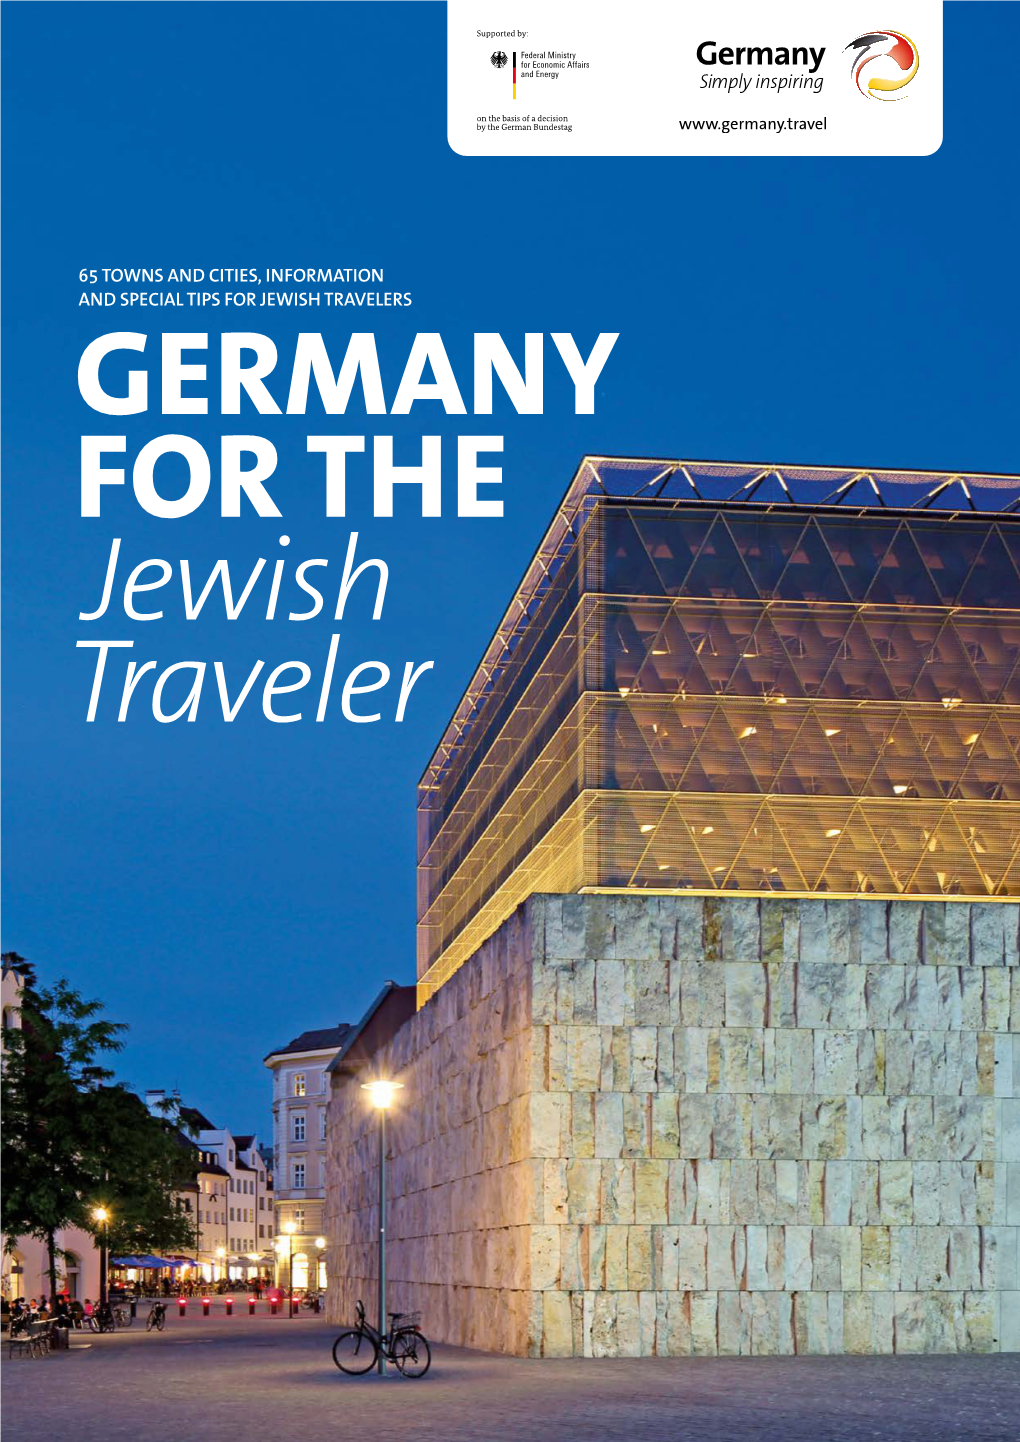 JEWISH TRAVELERS GERMANY for the Jewish Traveler